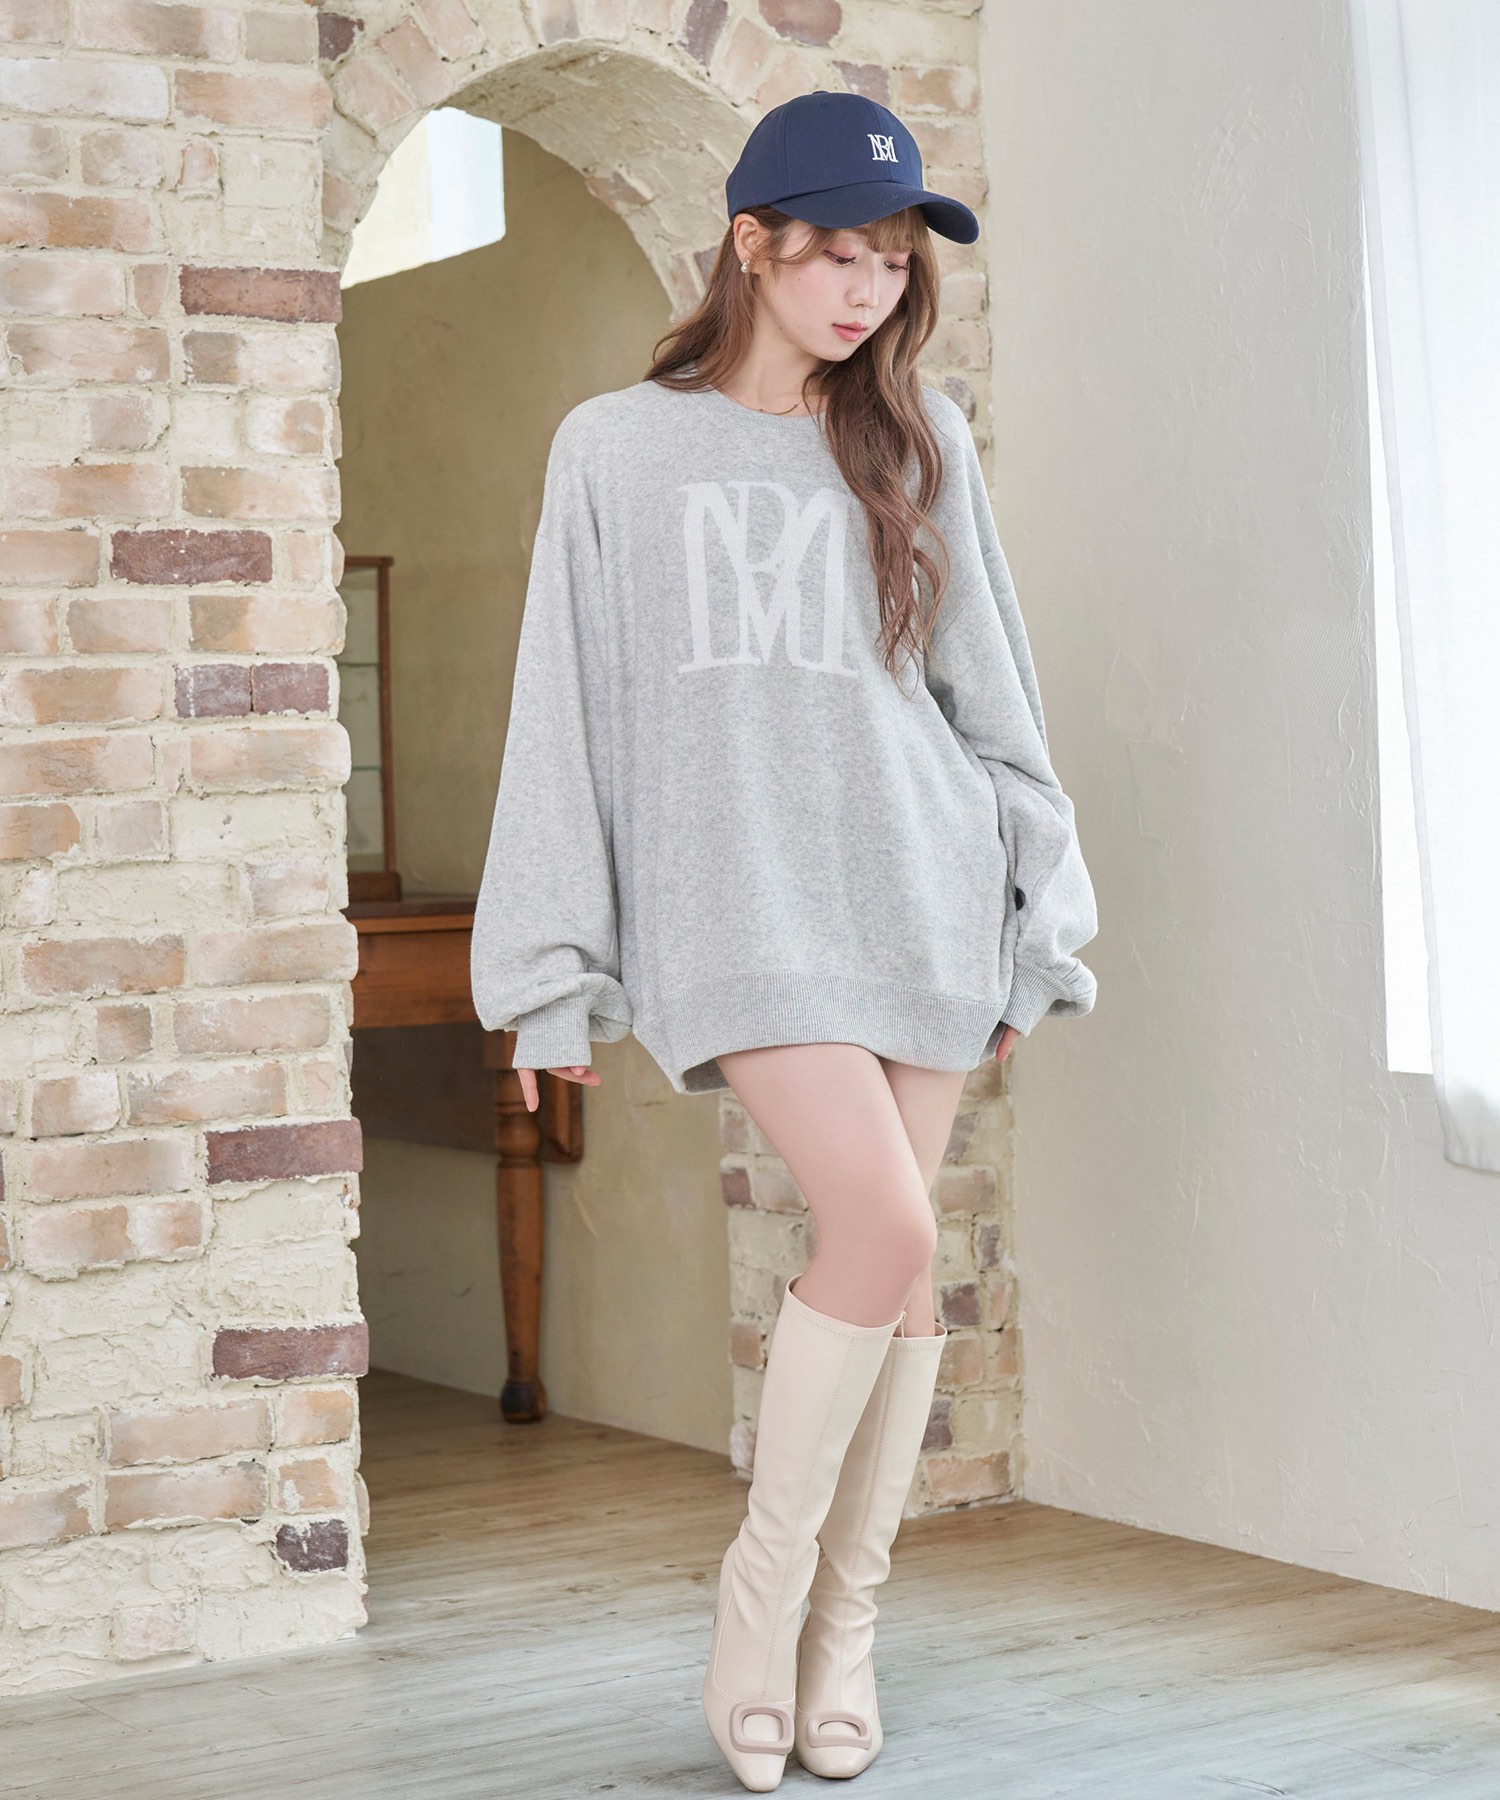 Rosé Muse RM logo knit_L size【white】